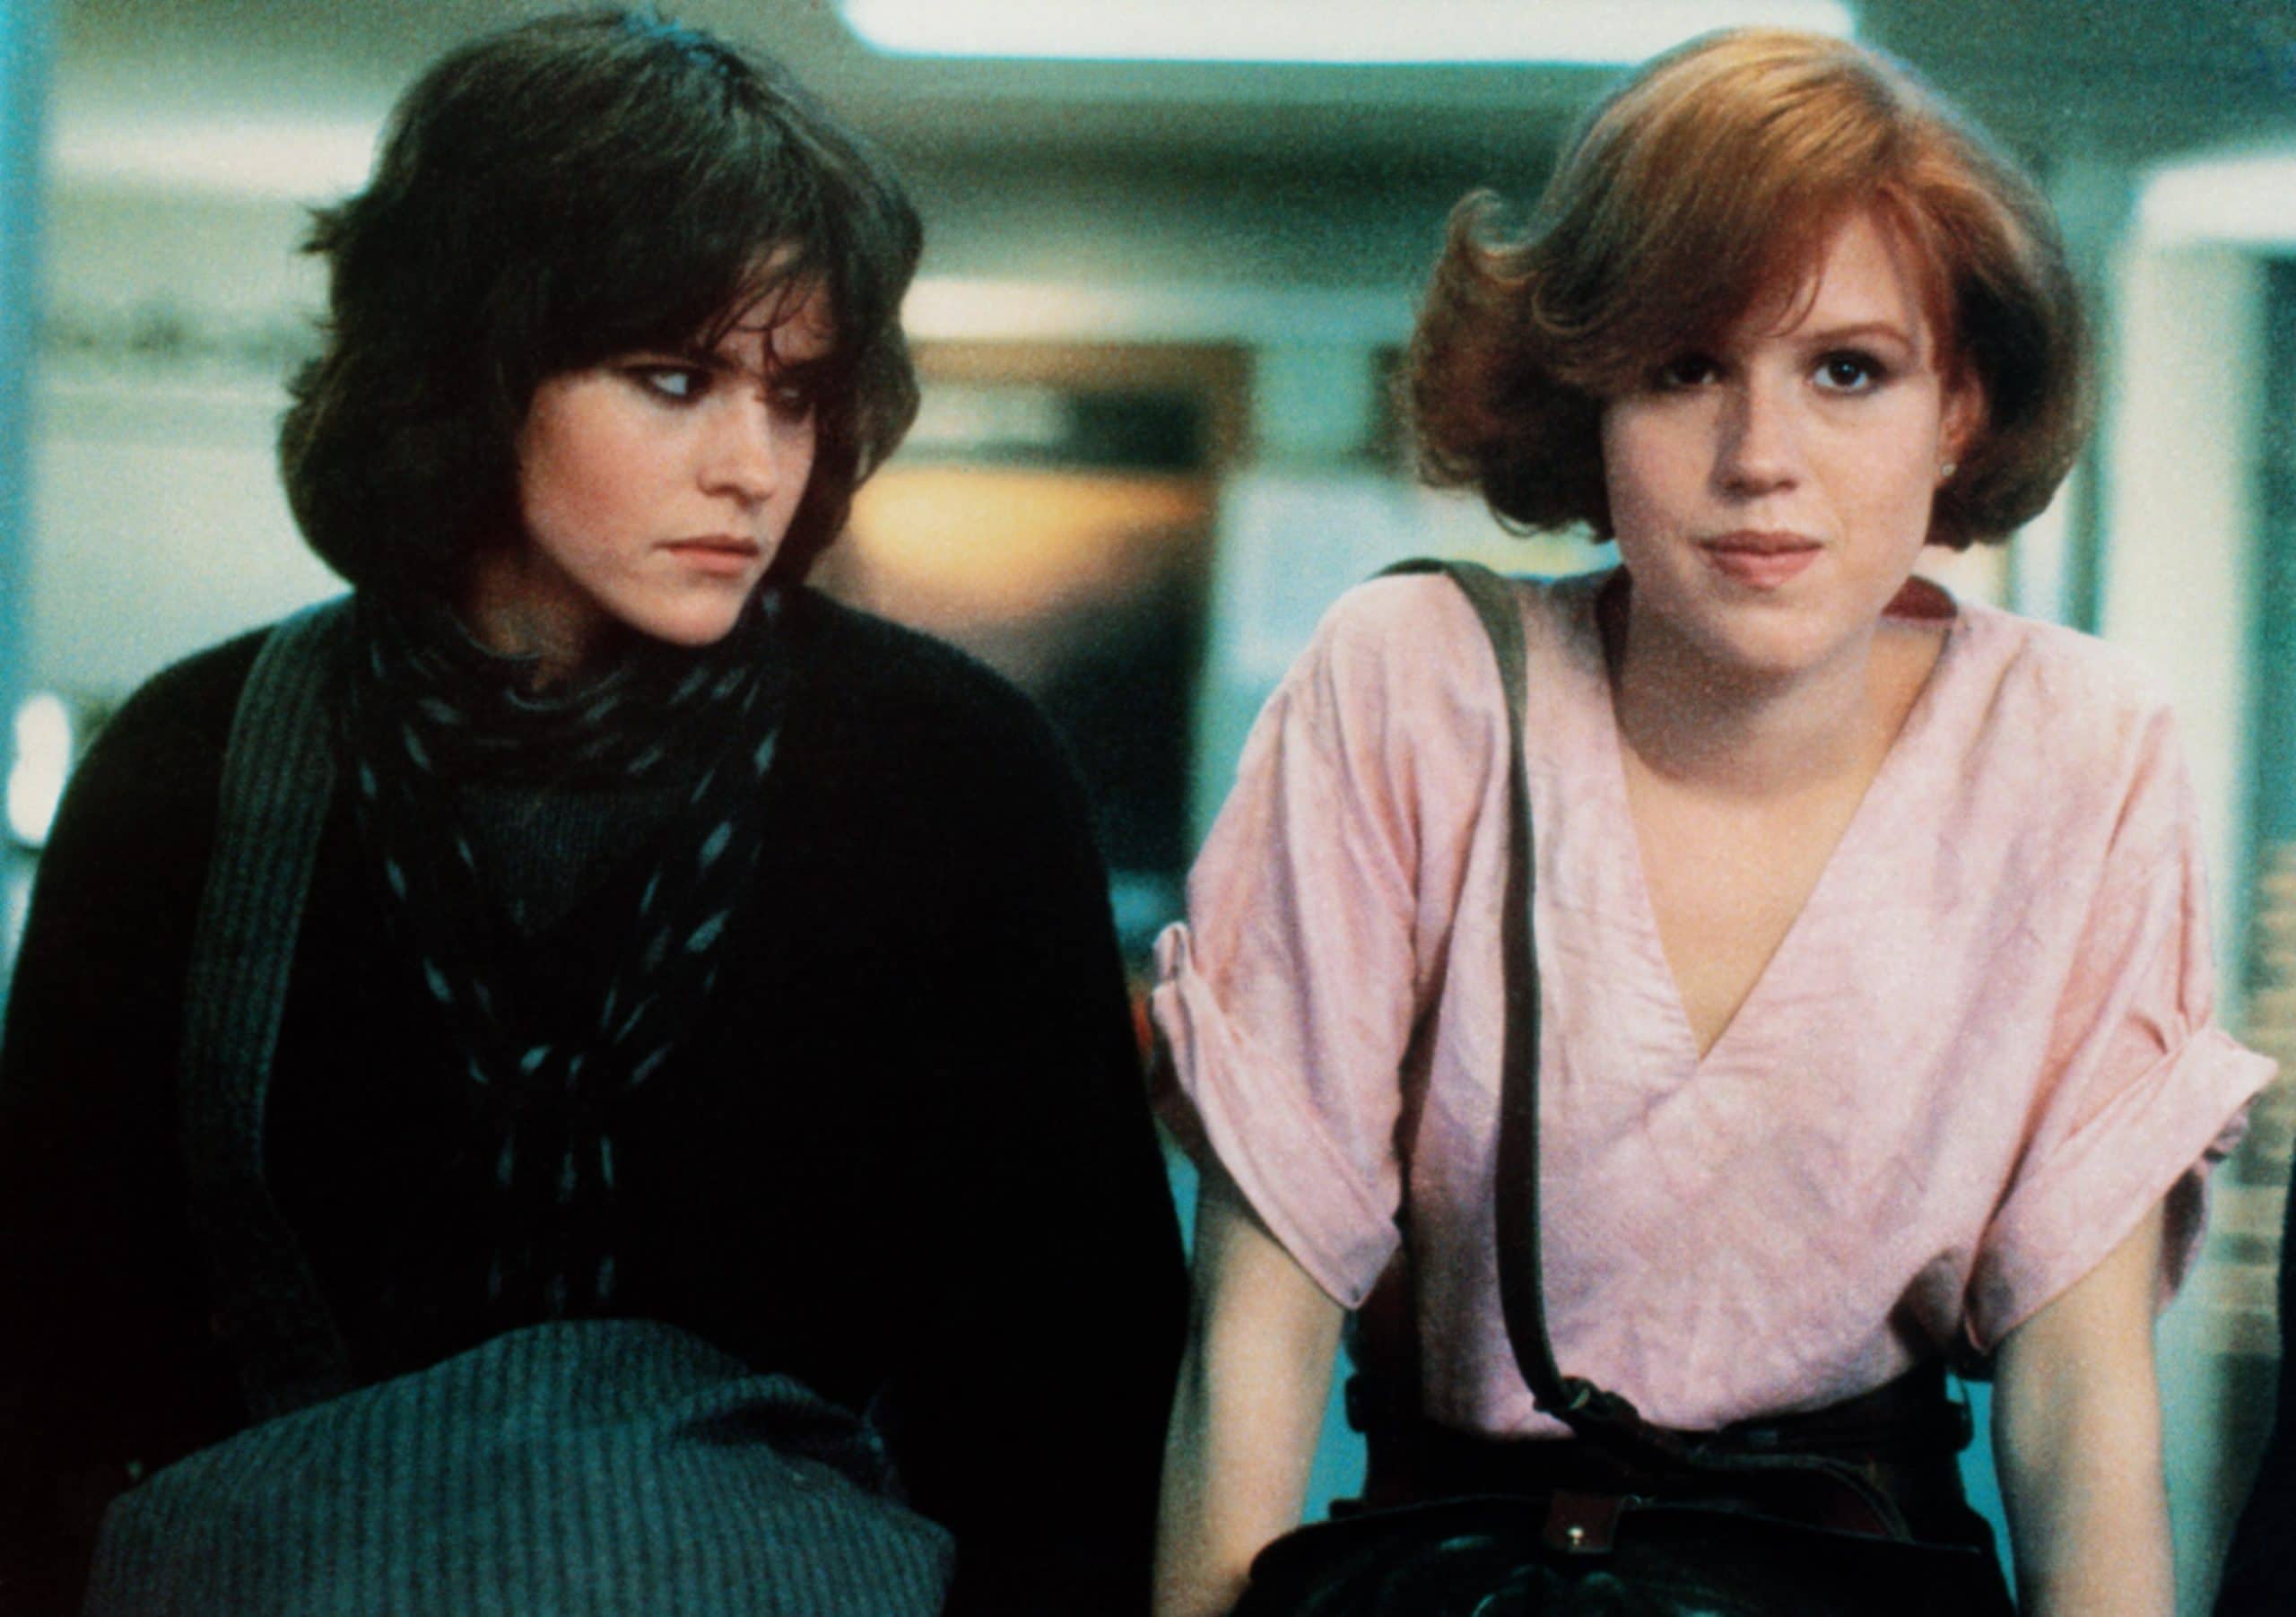 THE BREAKFAST CLUB, from left: Ally Sheedy, Molly Ringwald, 1985